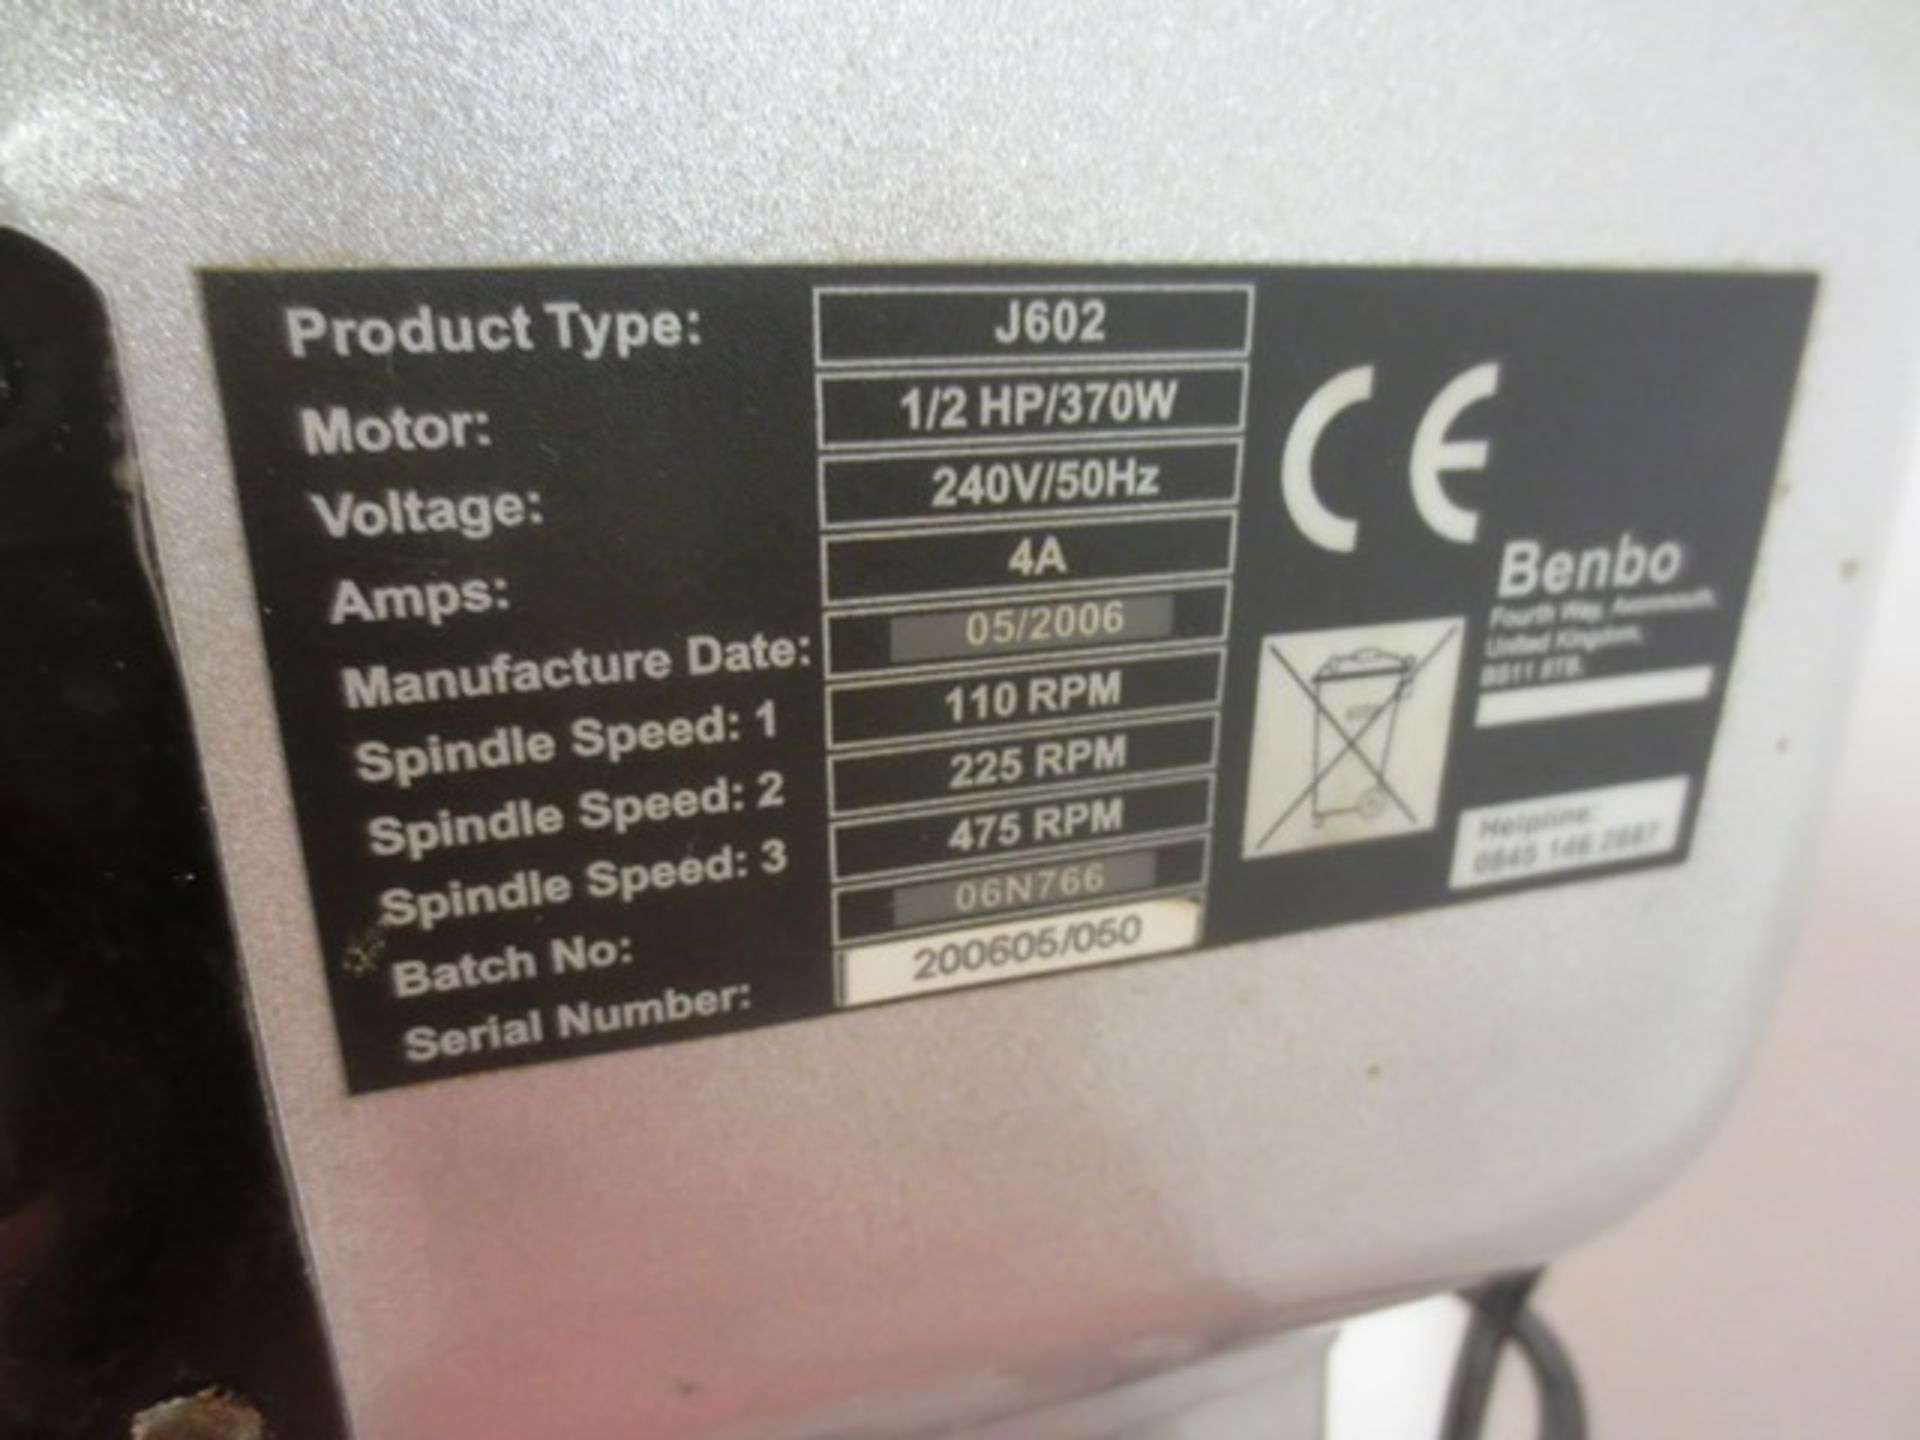 Benbo J602 bench top mixer (240v), spindle speeds: 110, 225, 475, serial no: 200605/050 (2006) - Image 2 of 3